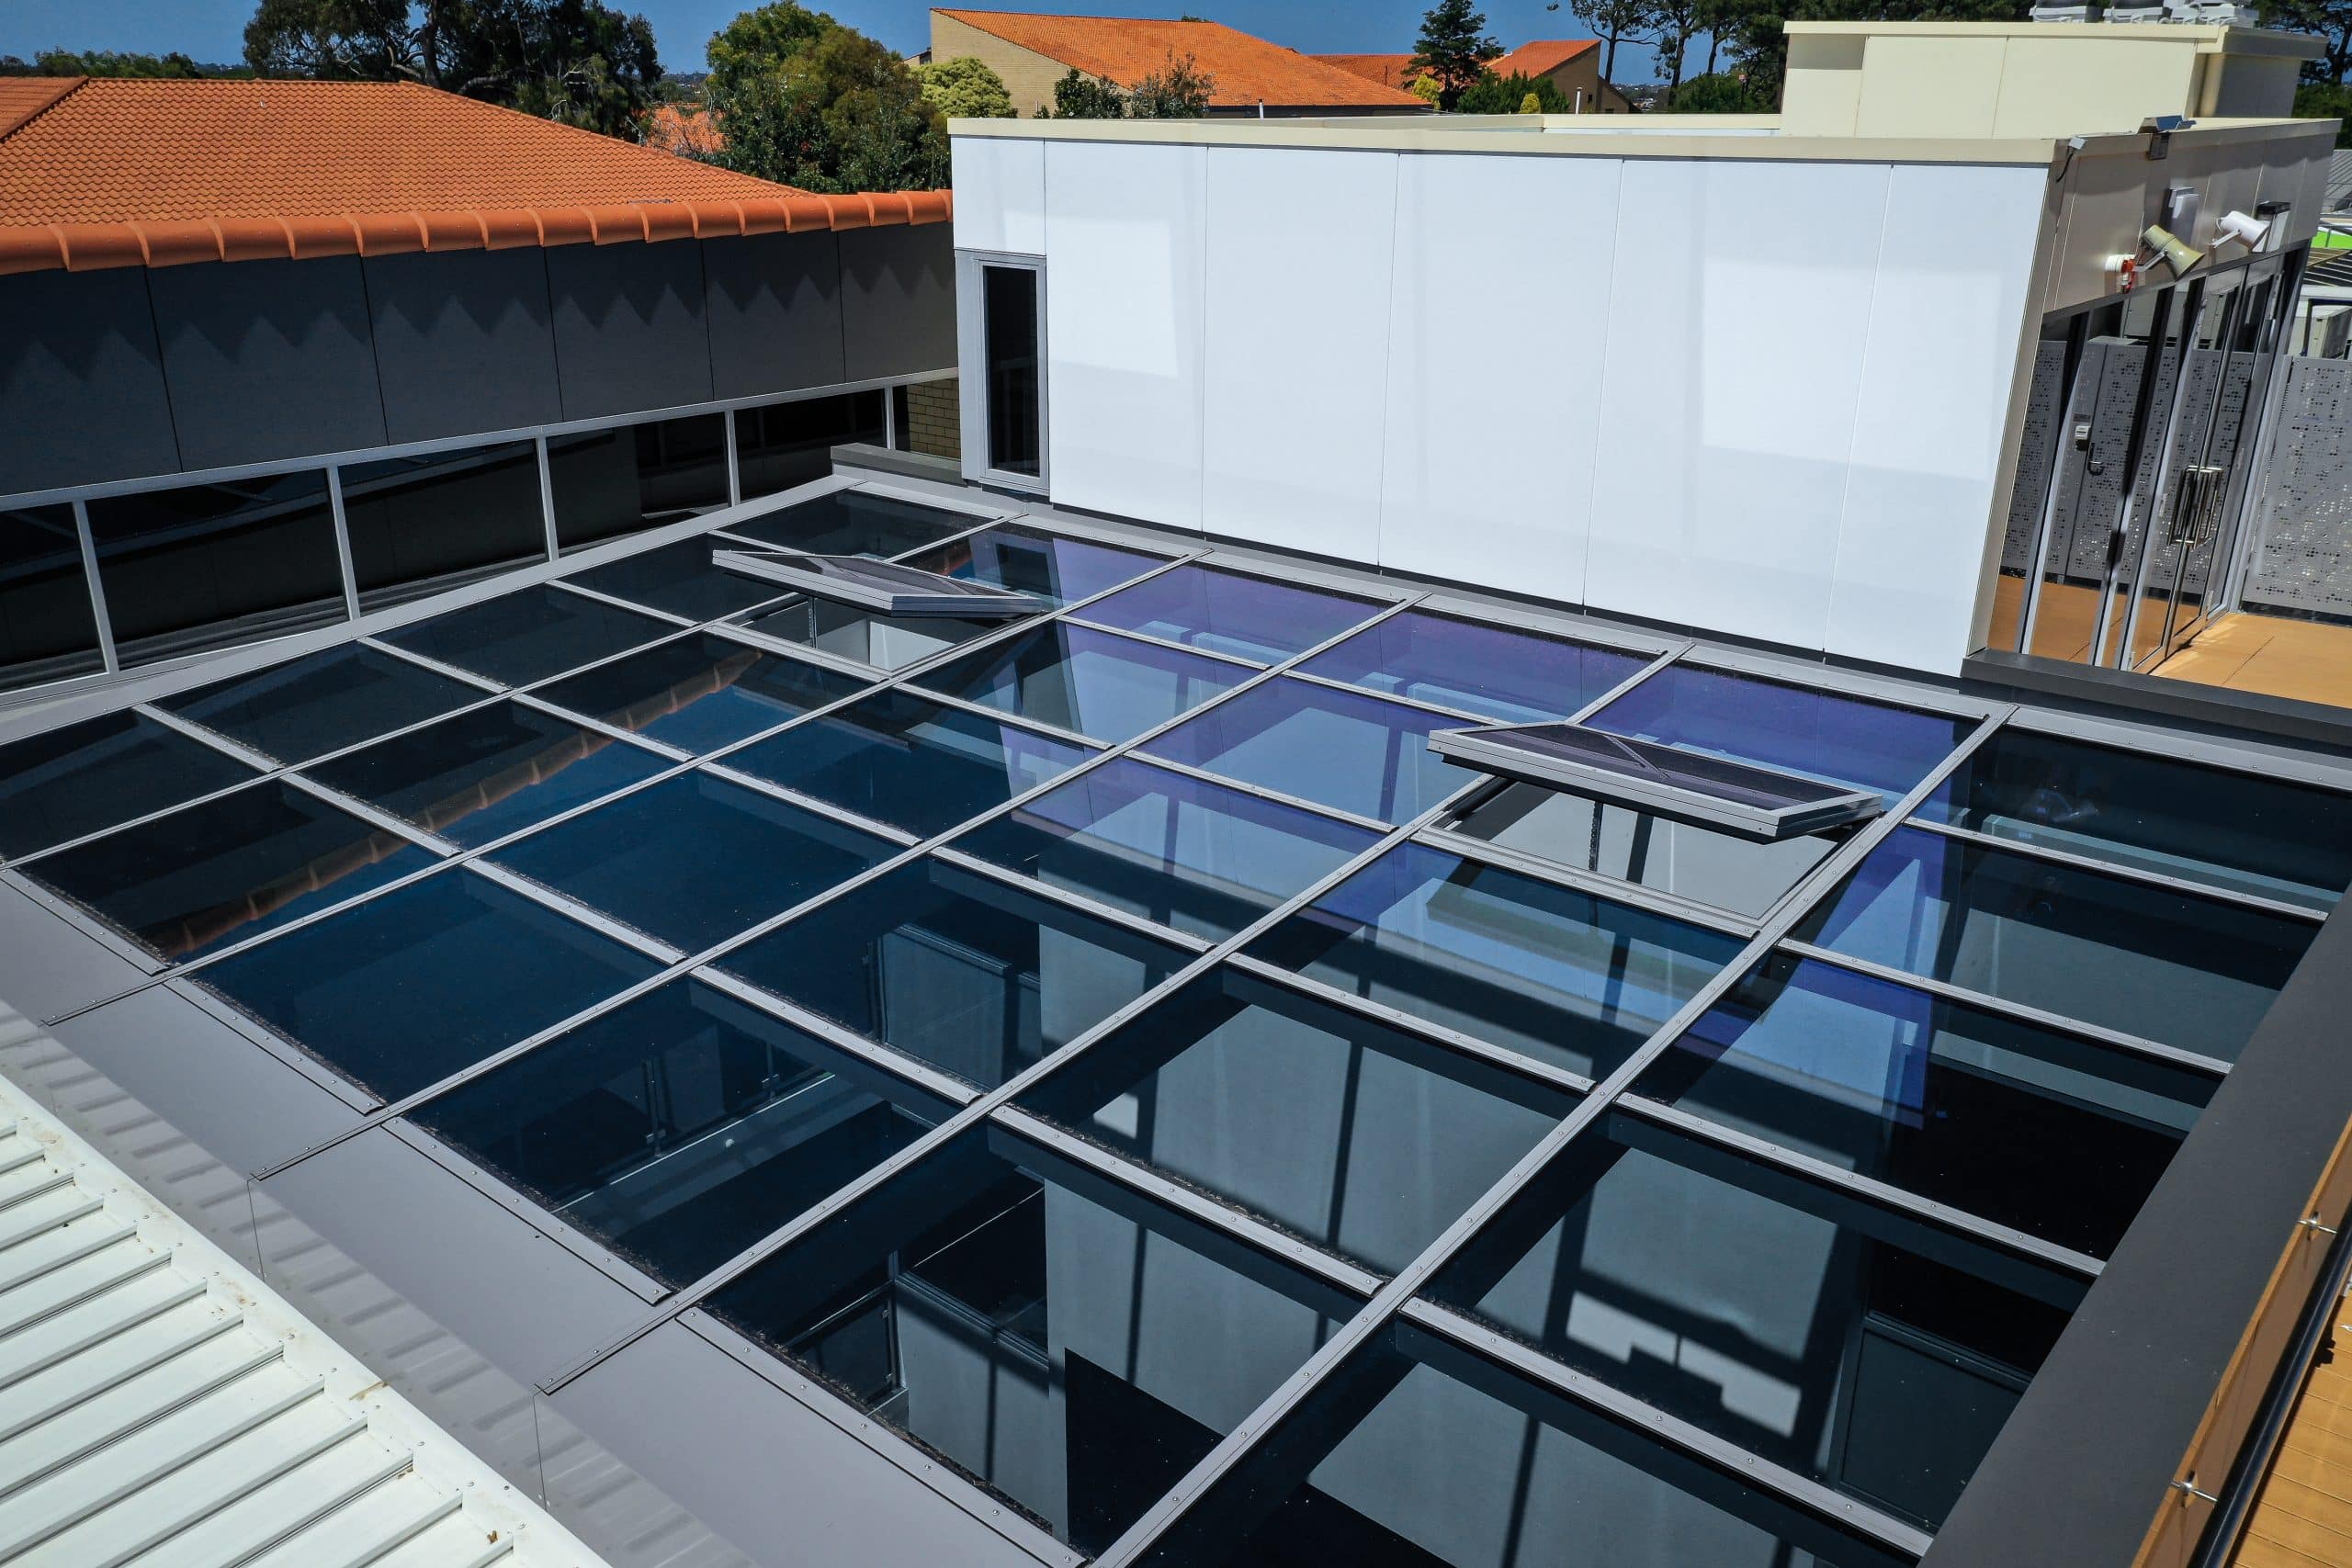 Tageslichtsystem von LAMILUX im Science Building des Penrhos Colleges in Australien.